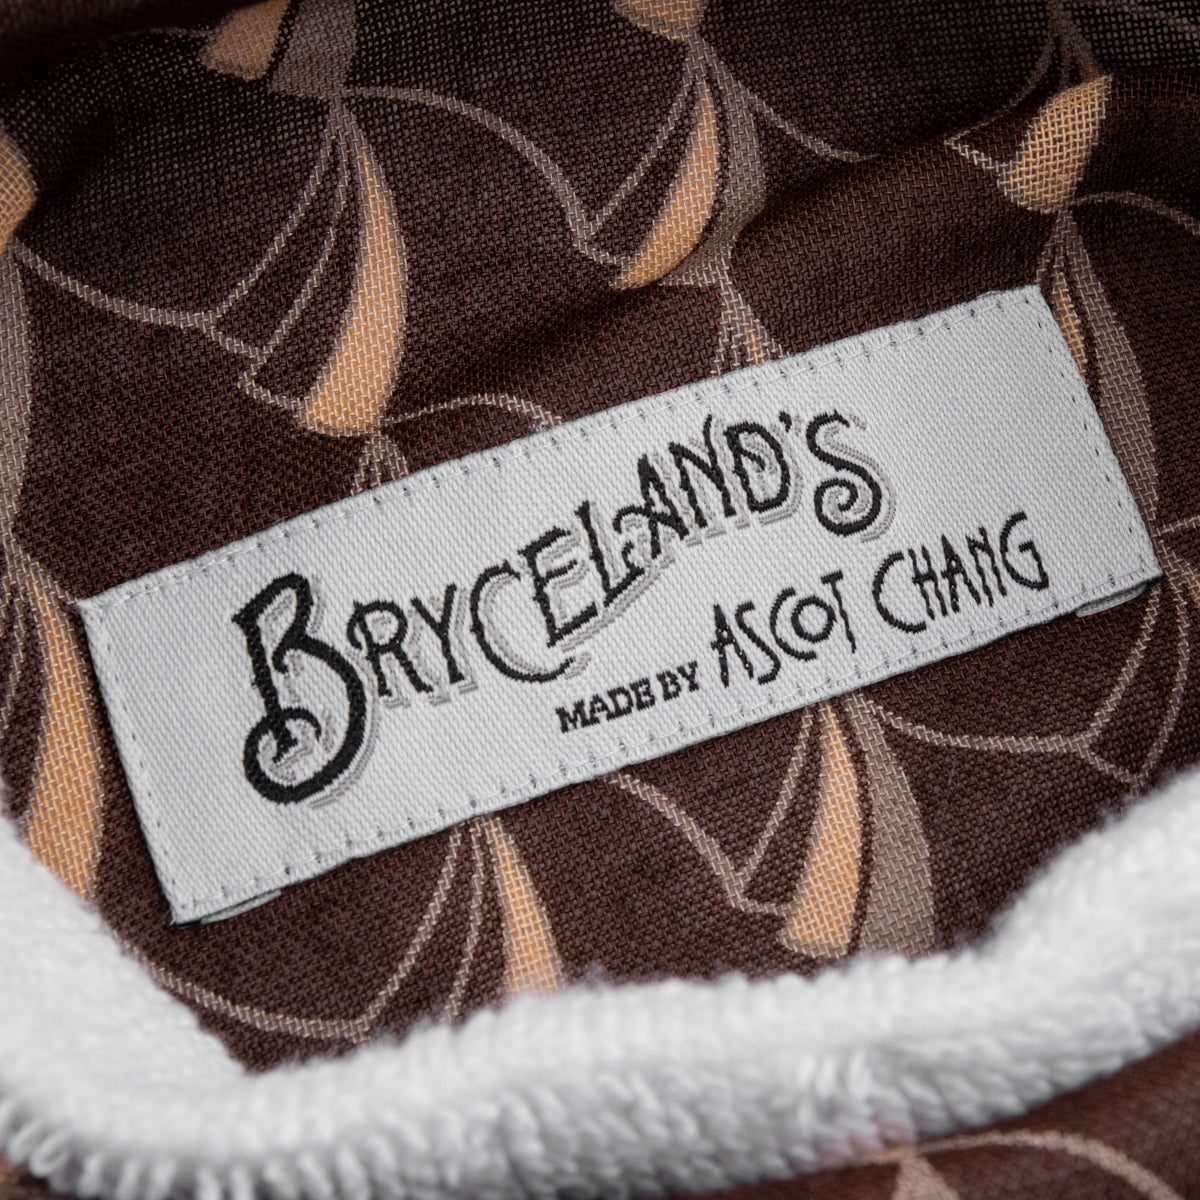 Bryceland's Co Towel Shirt